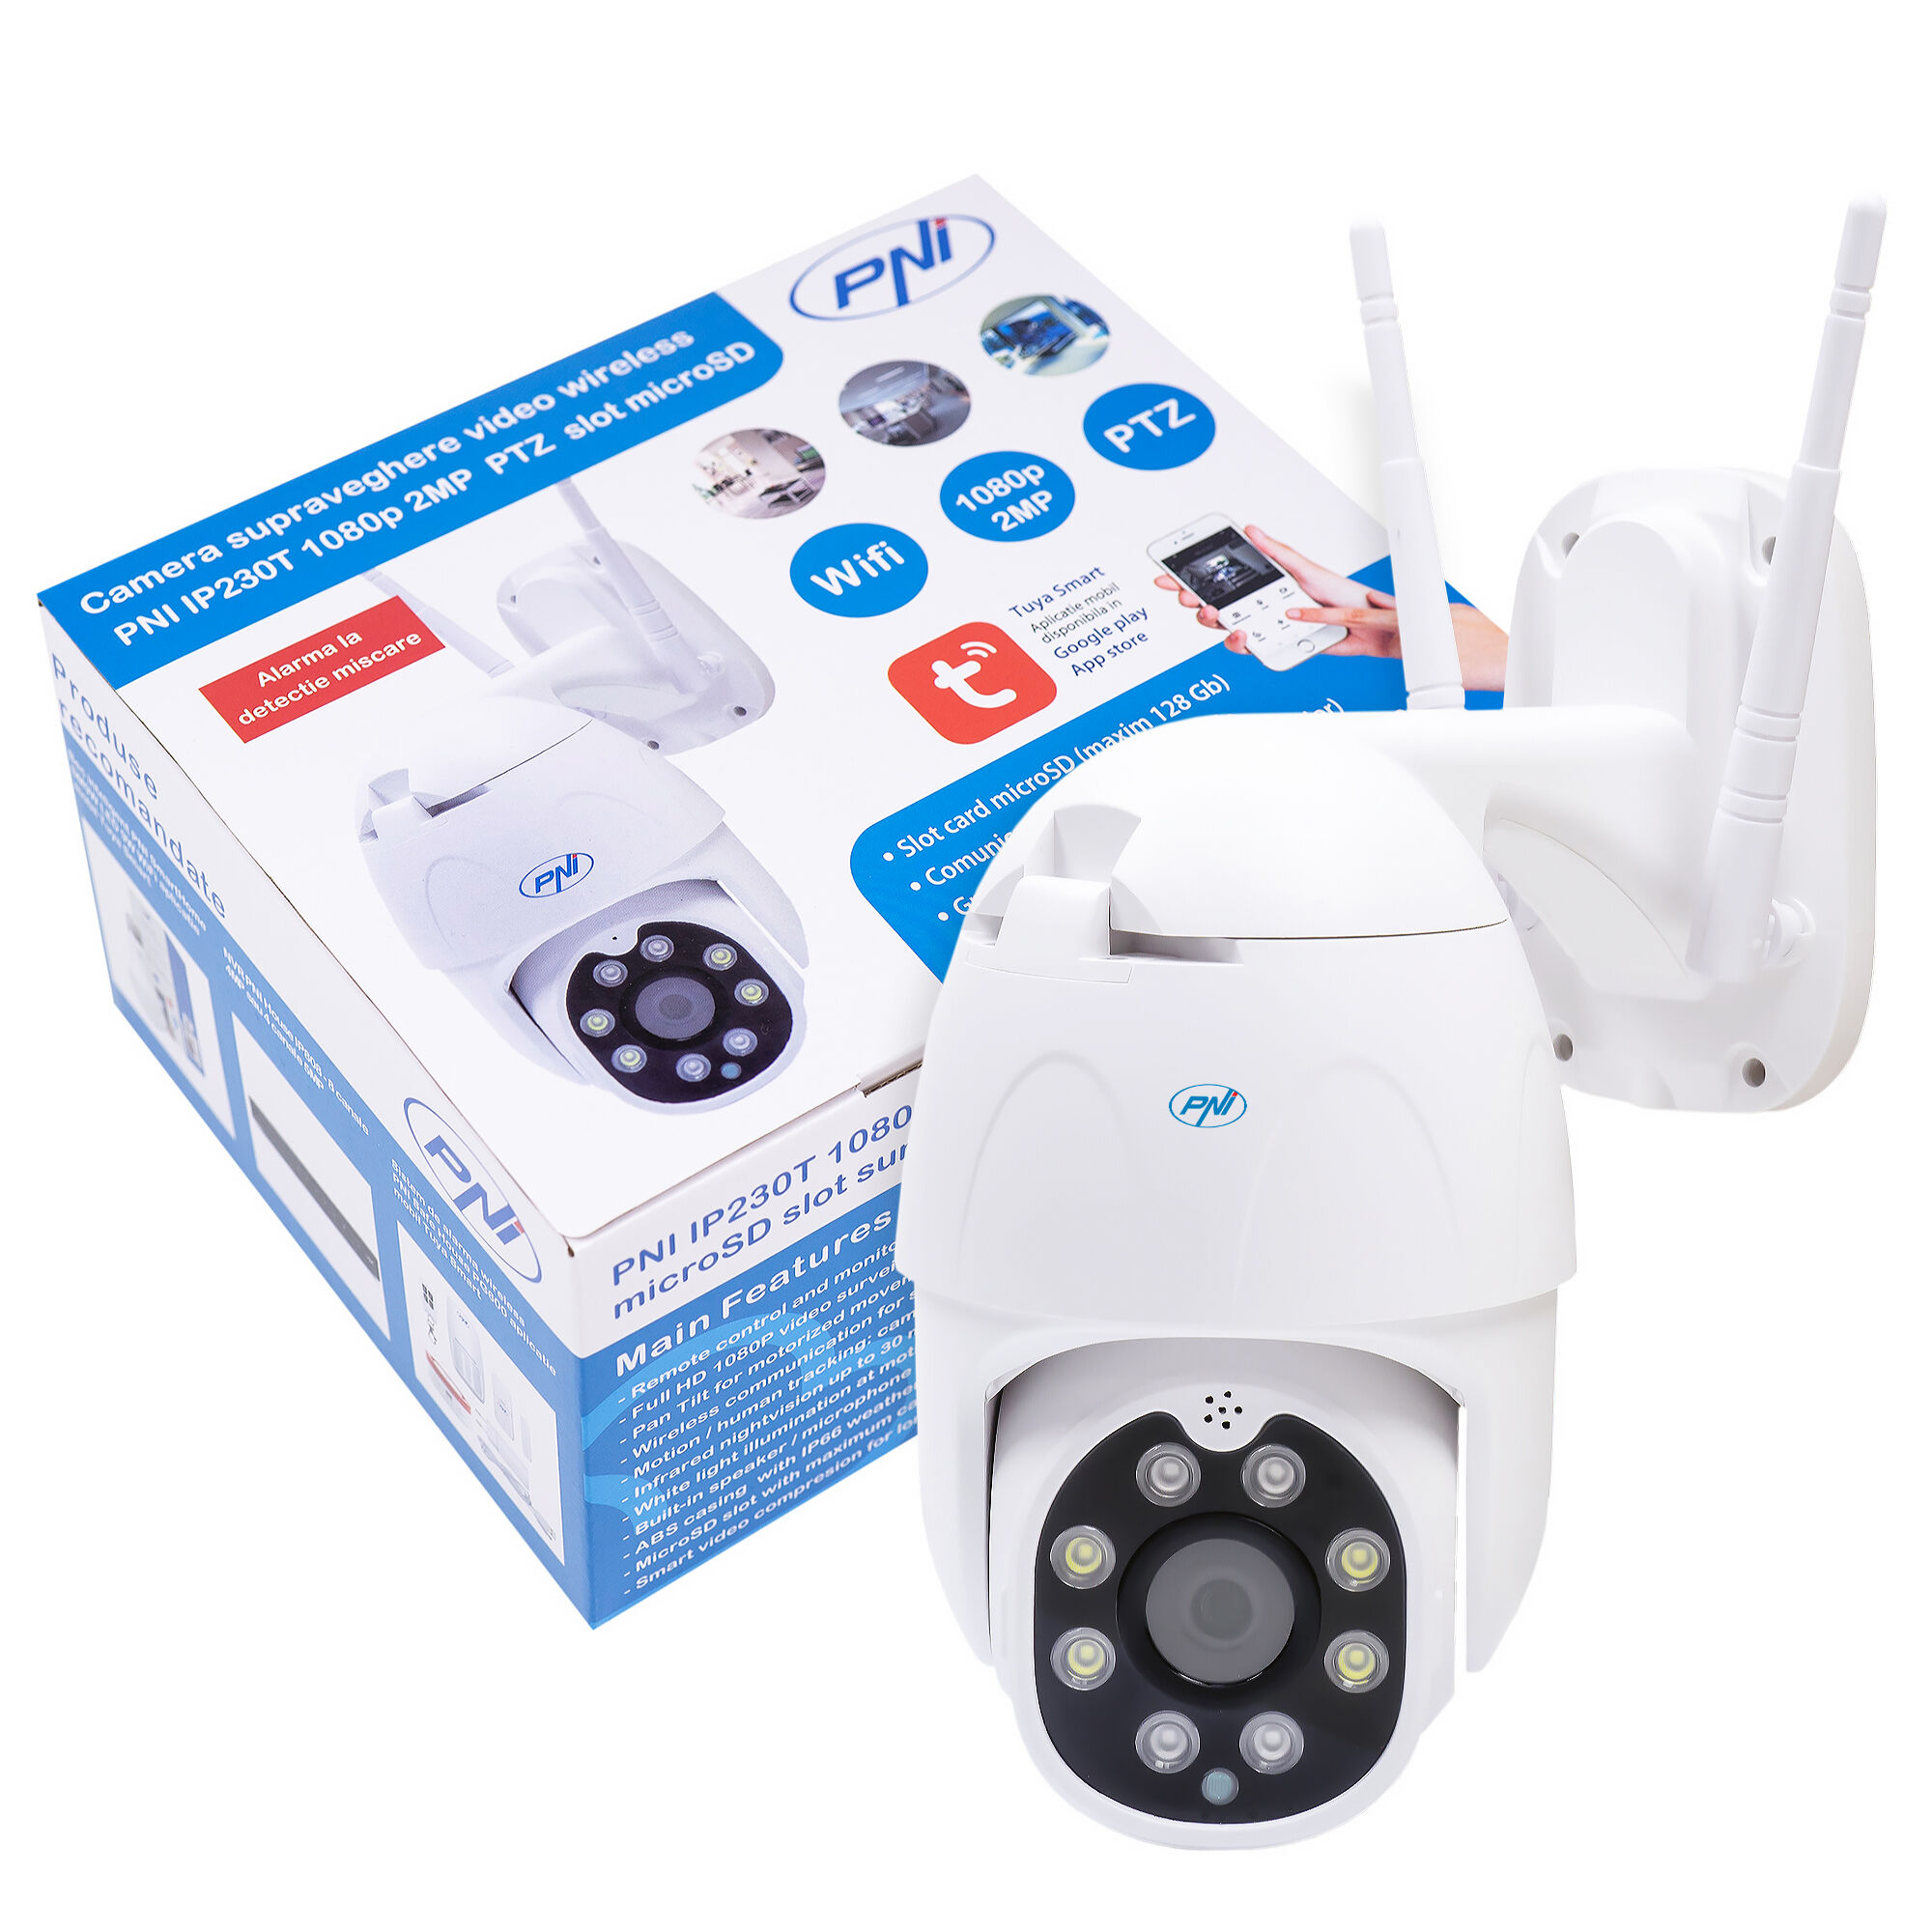 PNI IP230T 1080P drahtlose Videoüberwachungskamera mit PTZ